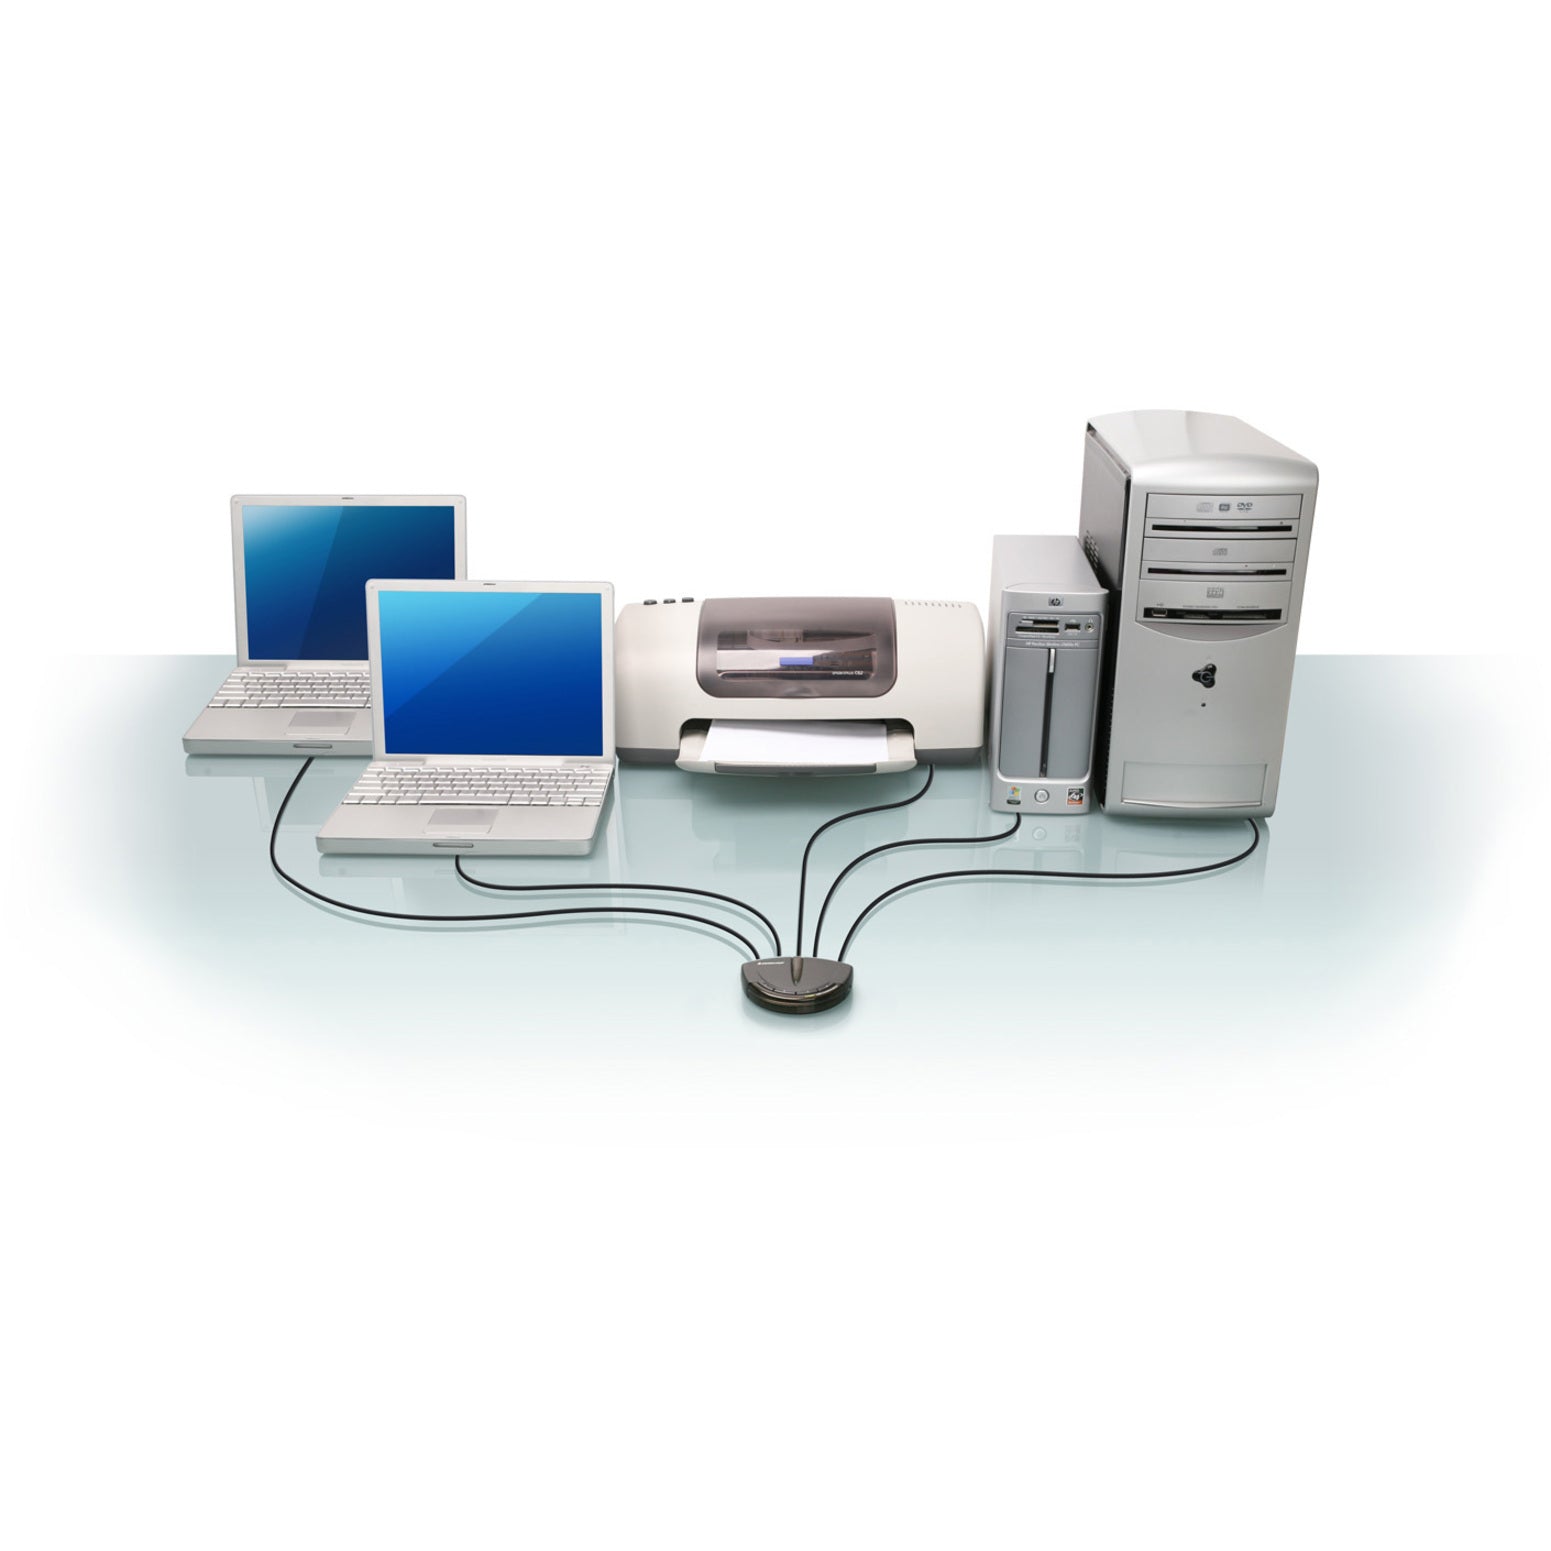 IOGEAR GUB431 4-Port USB 2.0 Automatic Printer Switch, No Software Installation Required